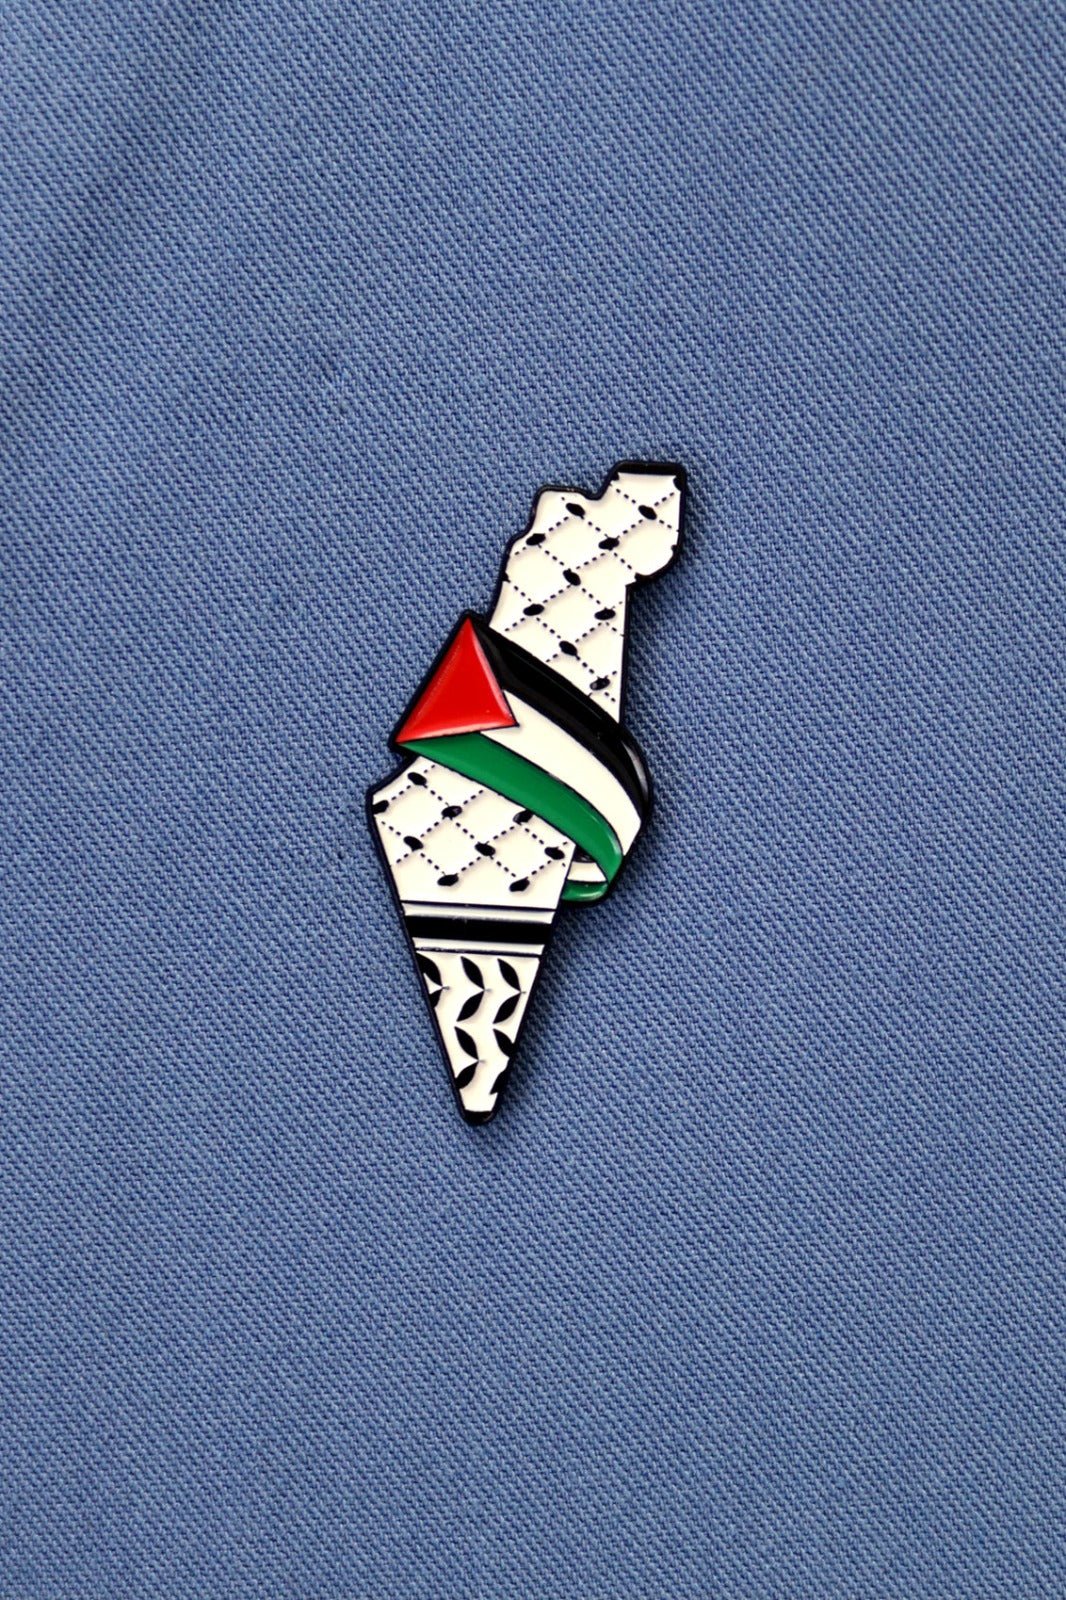 Palestine Map Pin